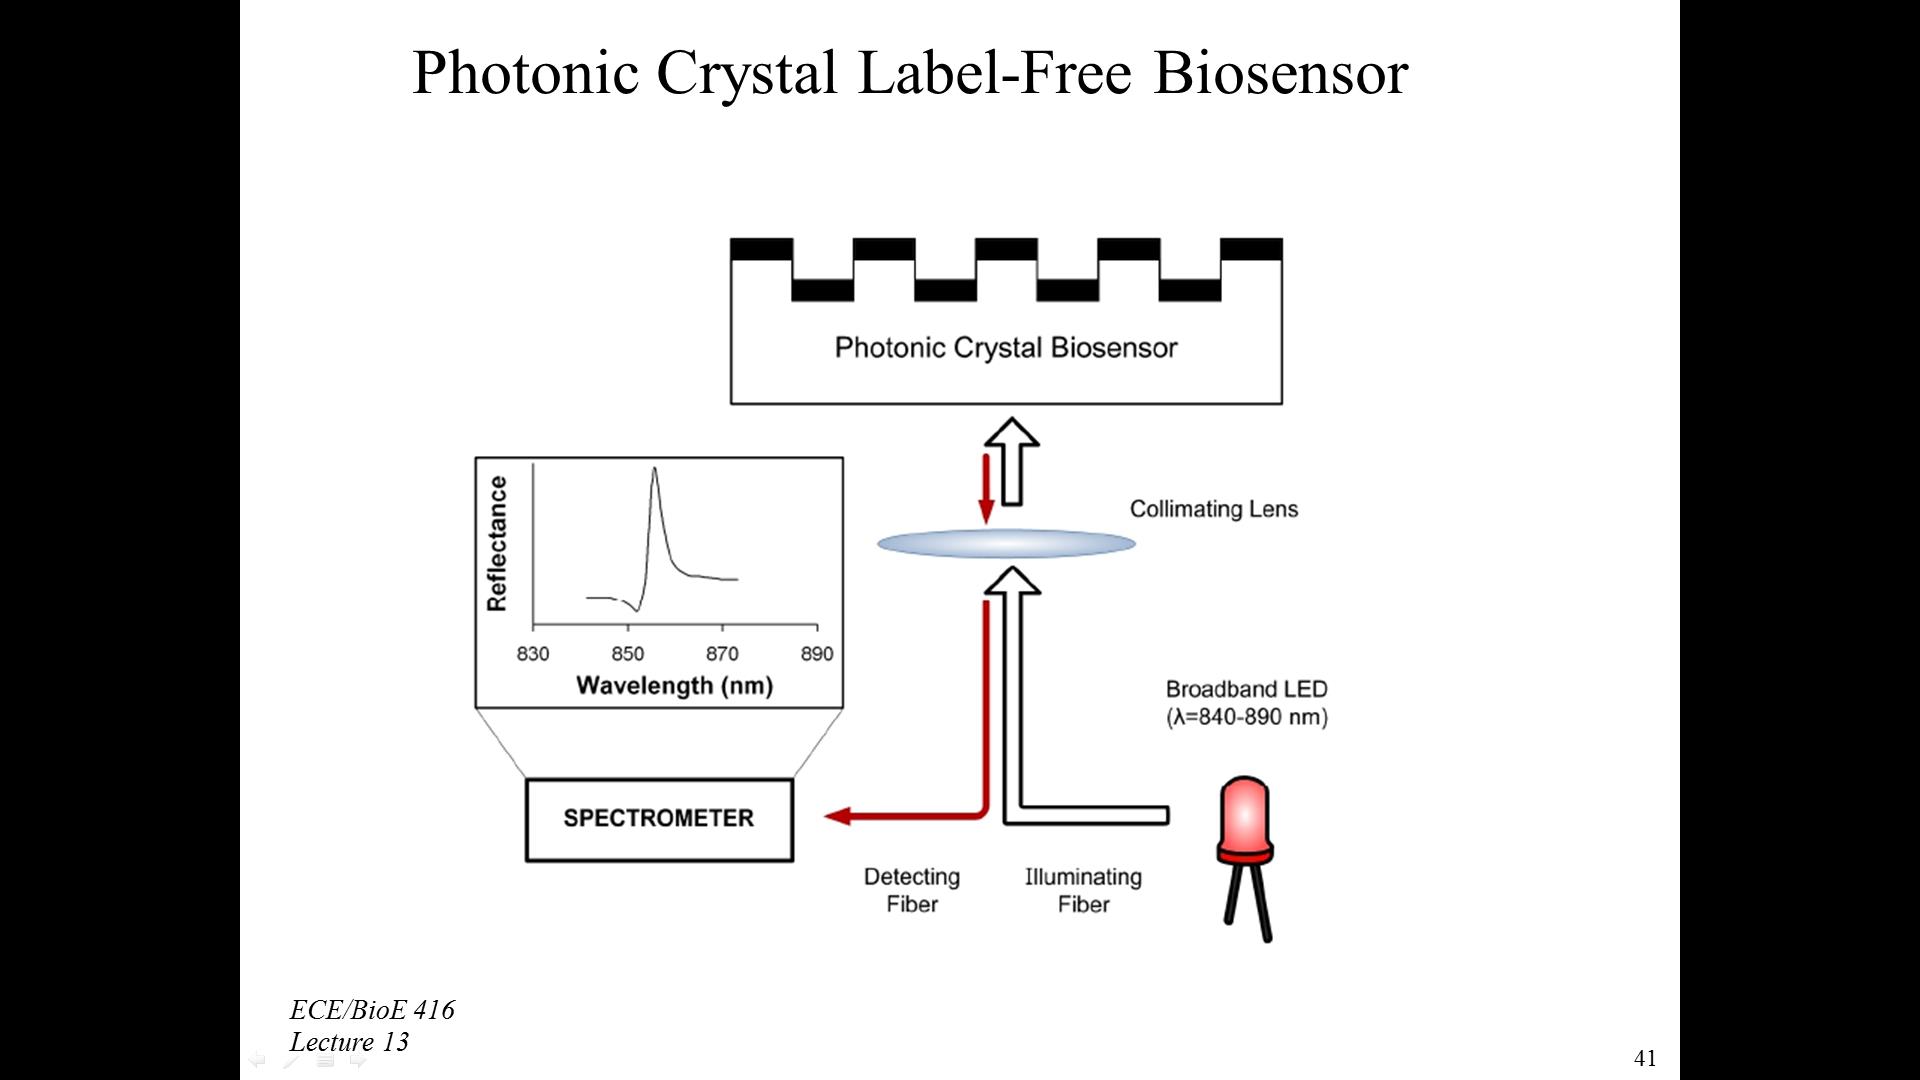 Photonic Crystal Label-Free Biosensor